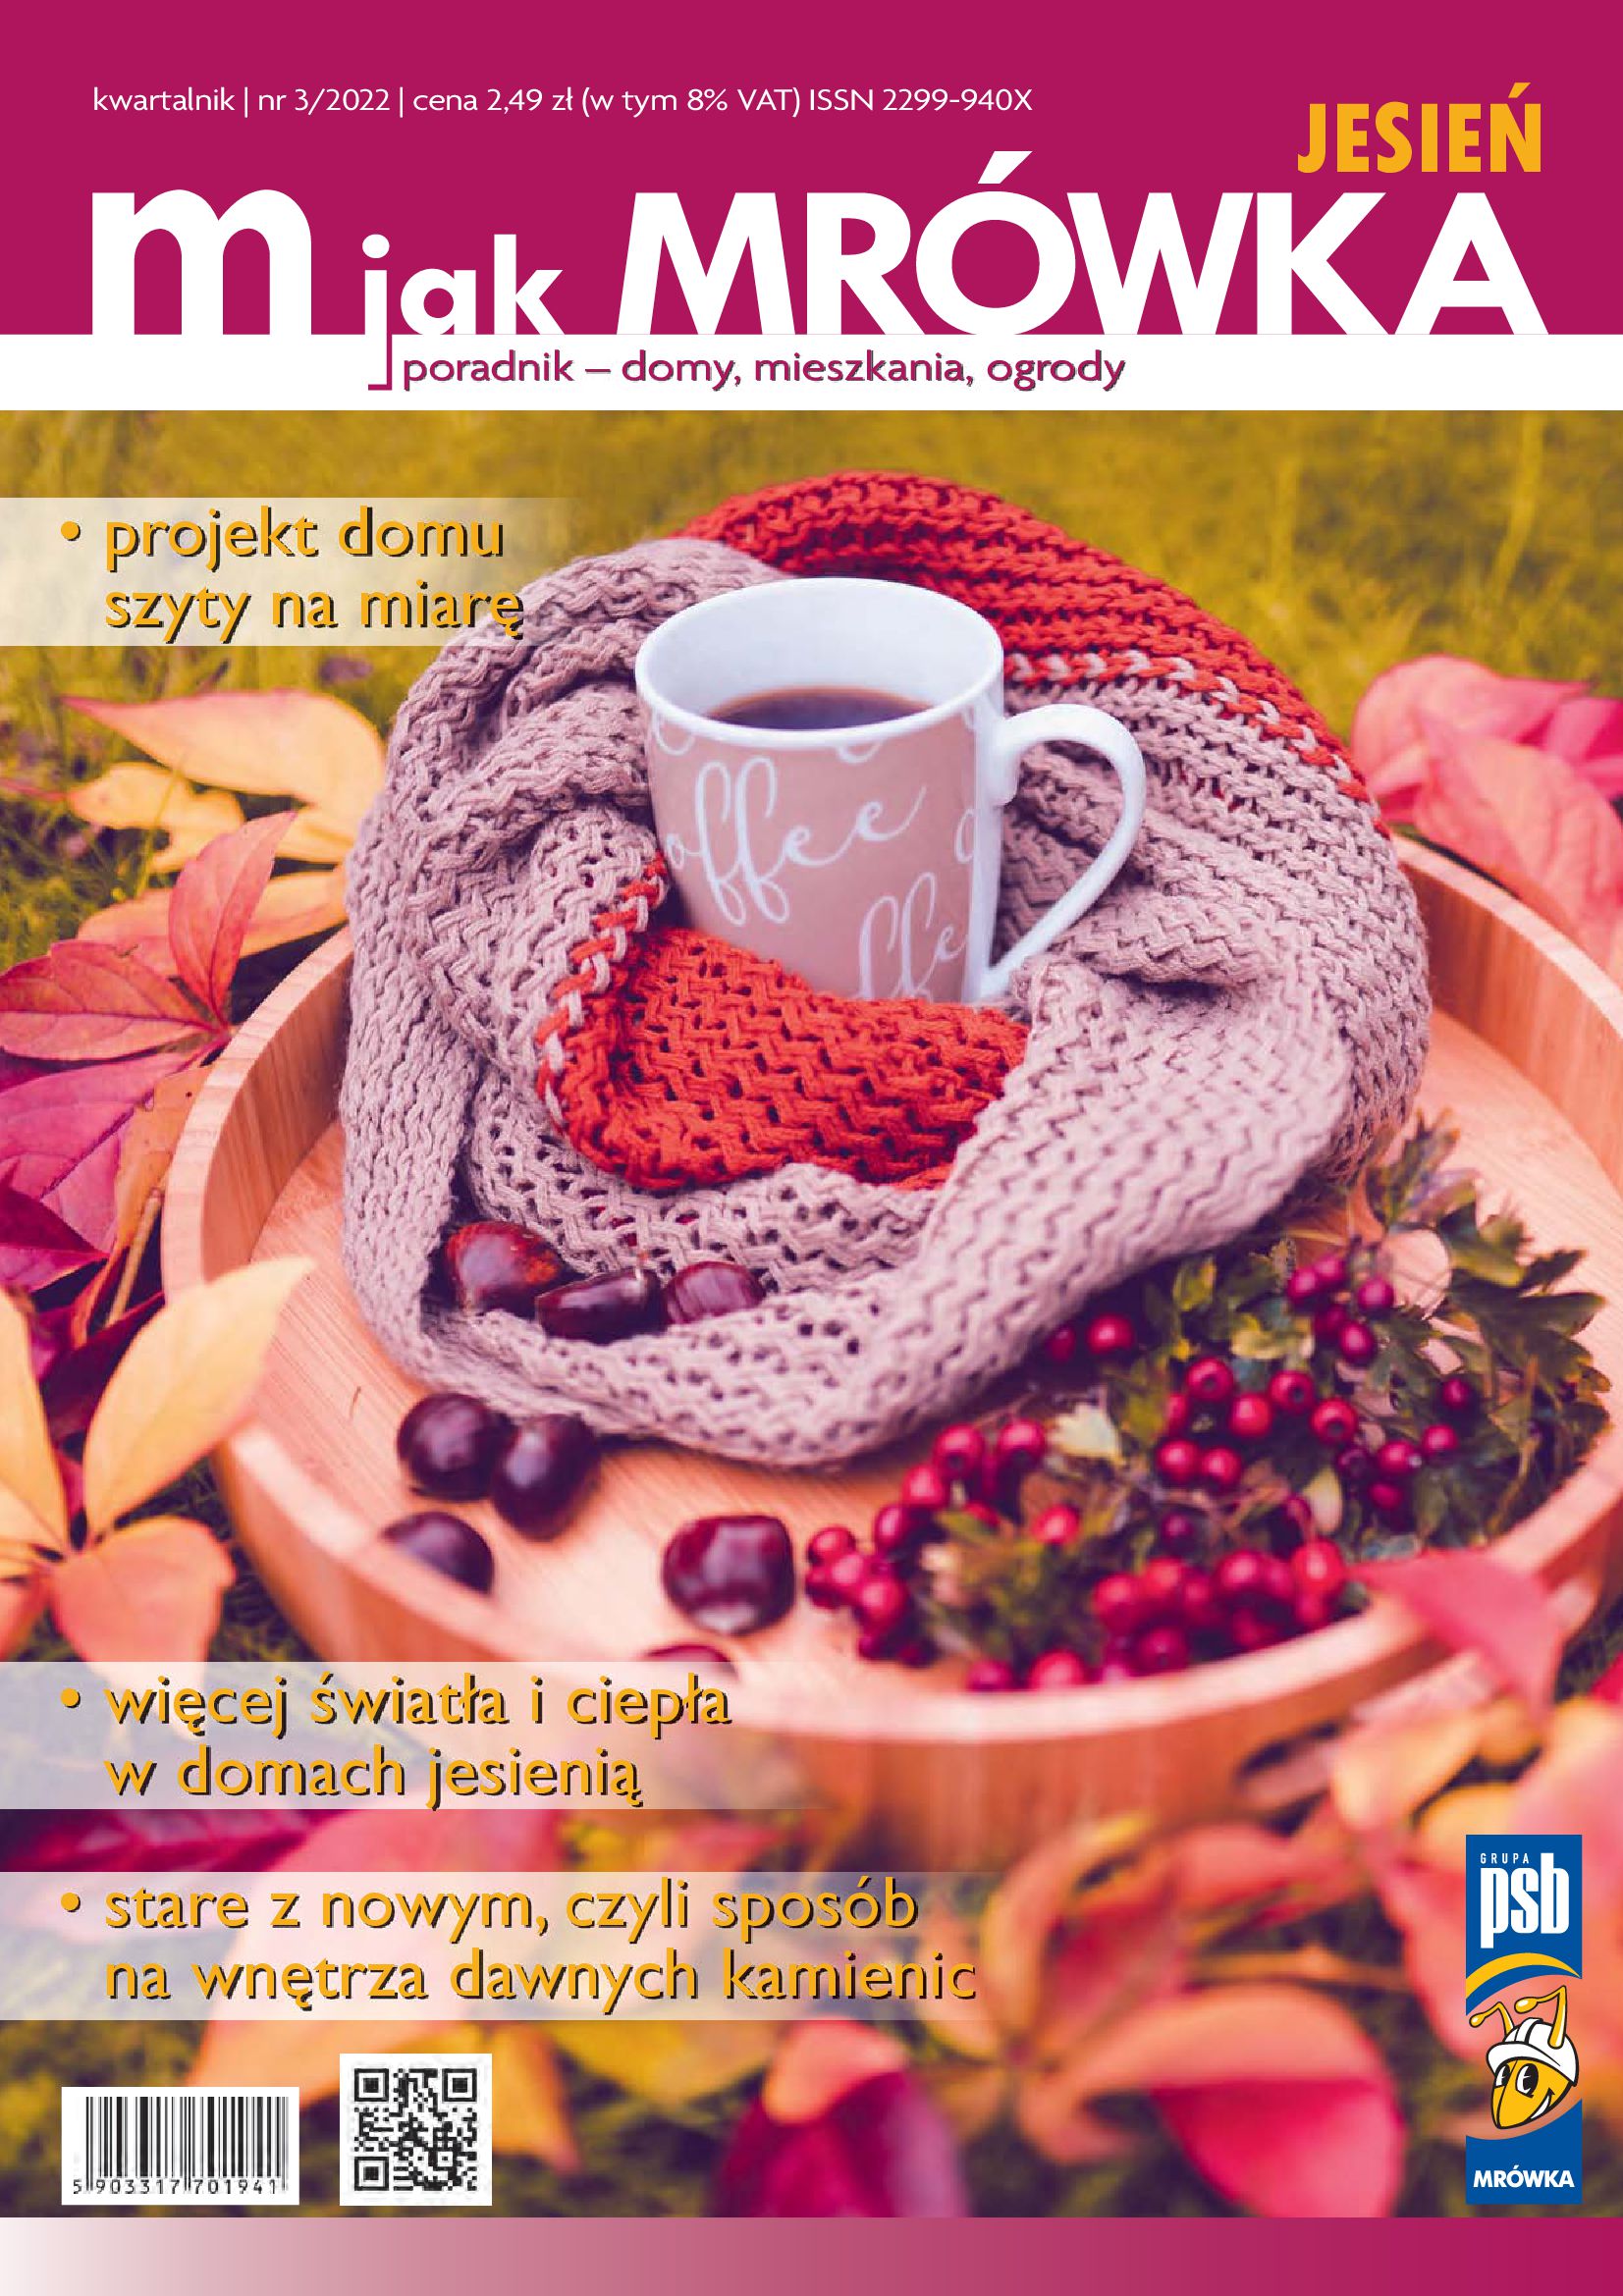 Gazetka PSB Mrówka: Katalog PSB Mrówka - Jesień 2022 2022-09-15 page-1